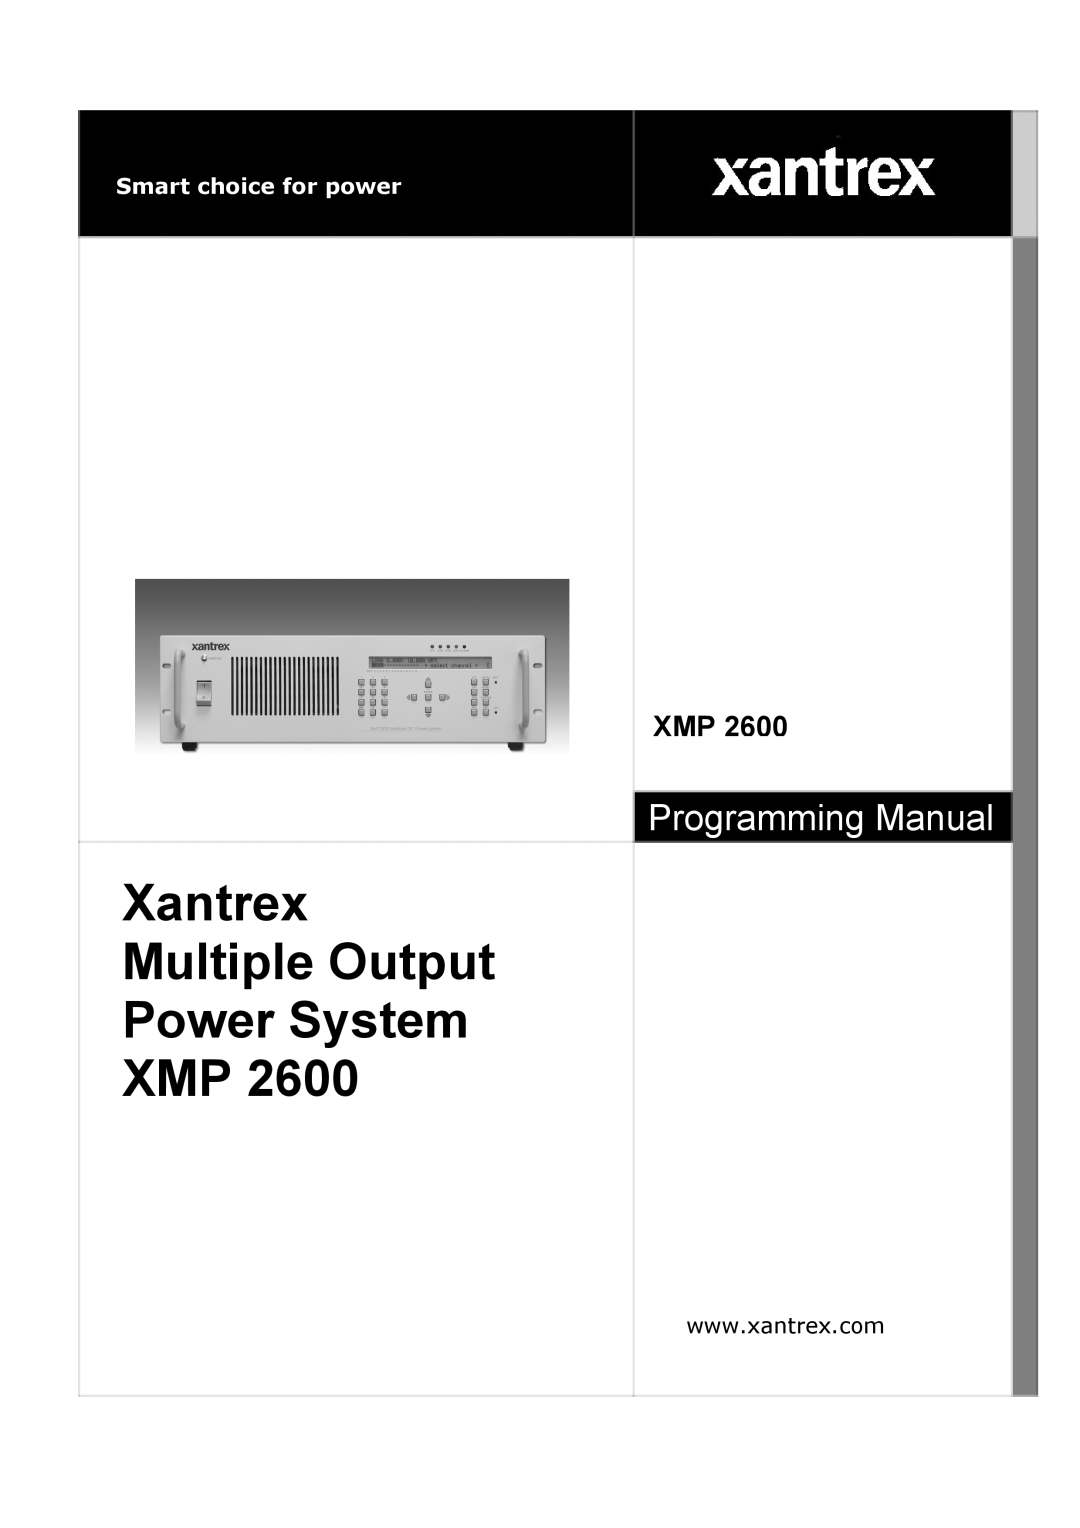 Xantrex Technology XMP 2600 manual Xantrex Multiple Output Power System XMP, Programming Manual, Smart choice for power 